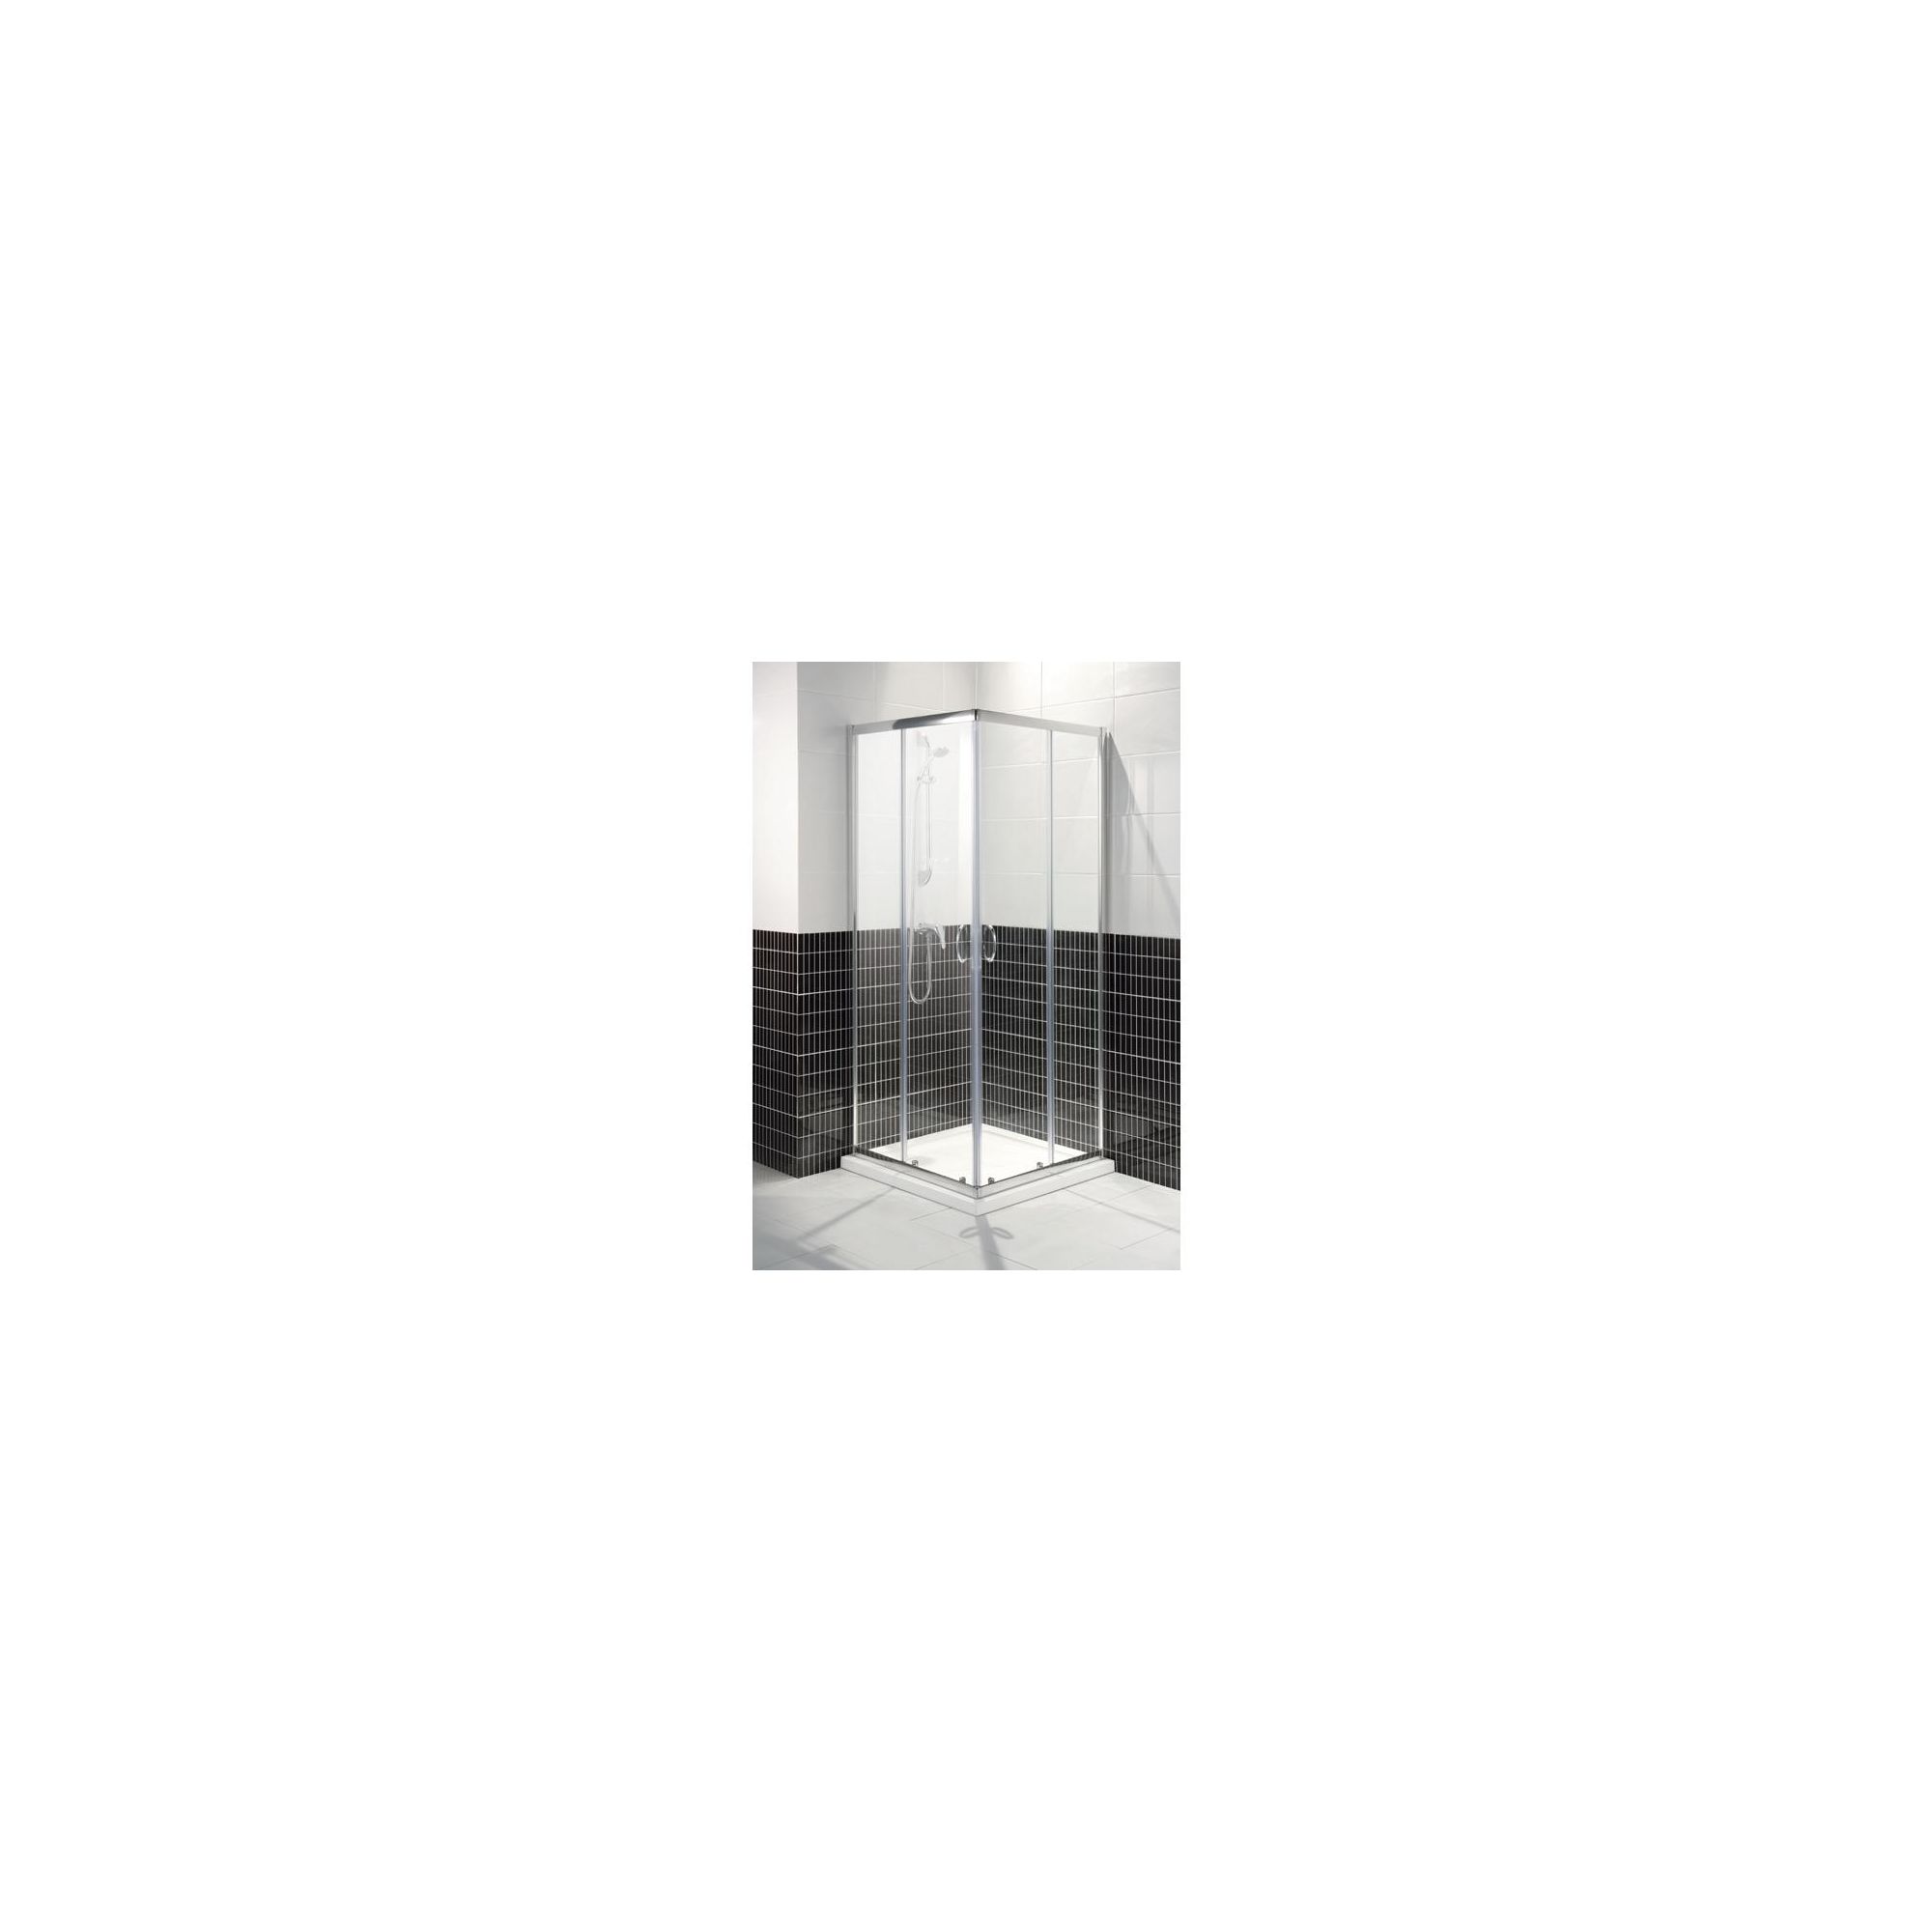 Balterley Framed Corner Entry Shower Enclosure, 760mm x 760mm, Standard Tray, 6mm glass at Tesco Direct